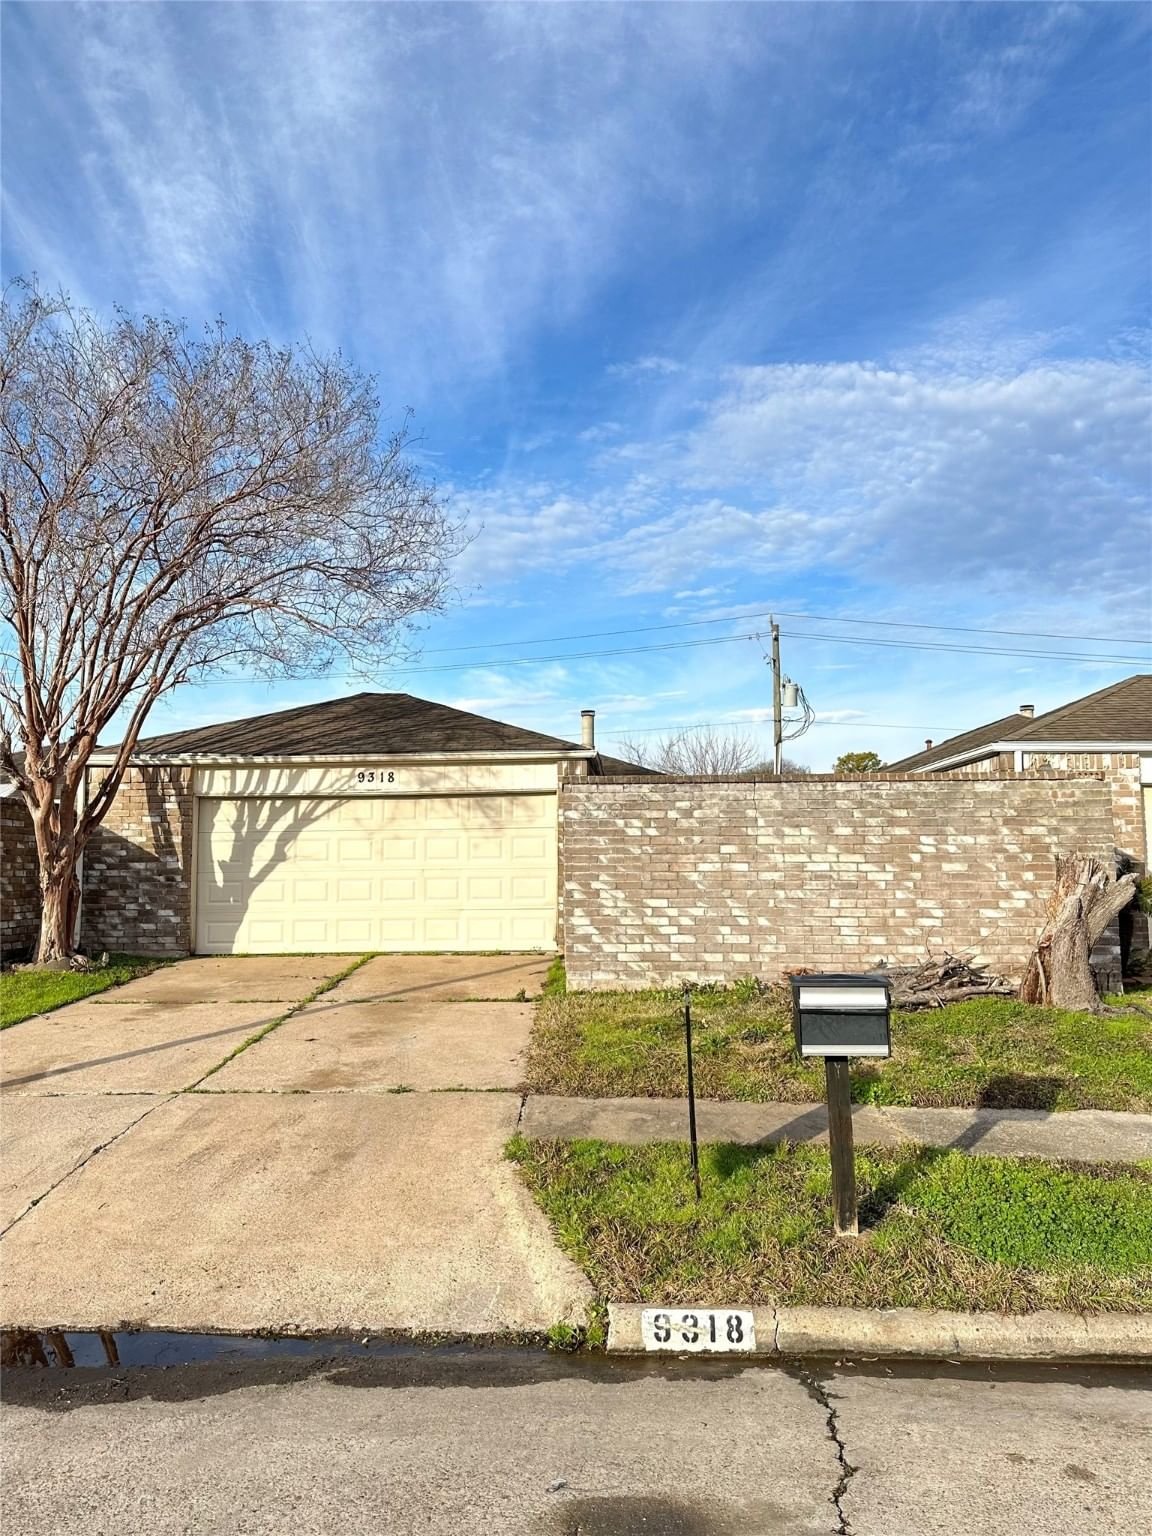 Real estate property located at 9318 Wellsworth, Harris, Keegans Wood Sec 01 R/P, Houston, TX, US